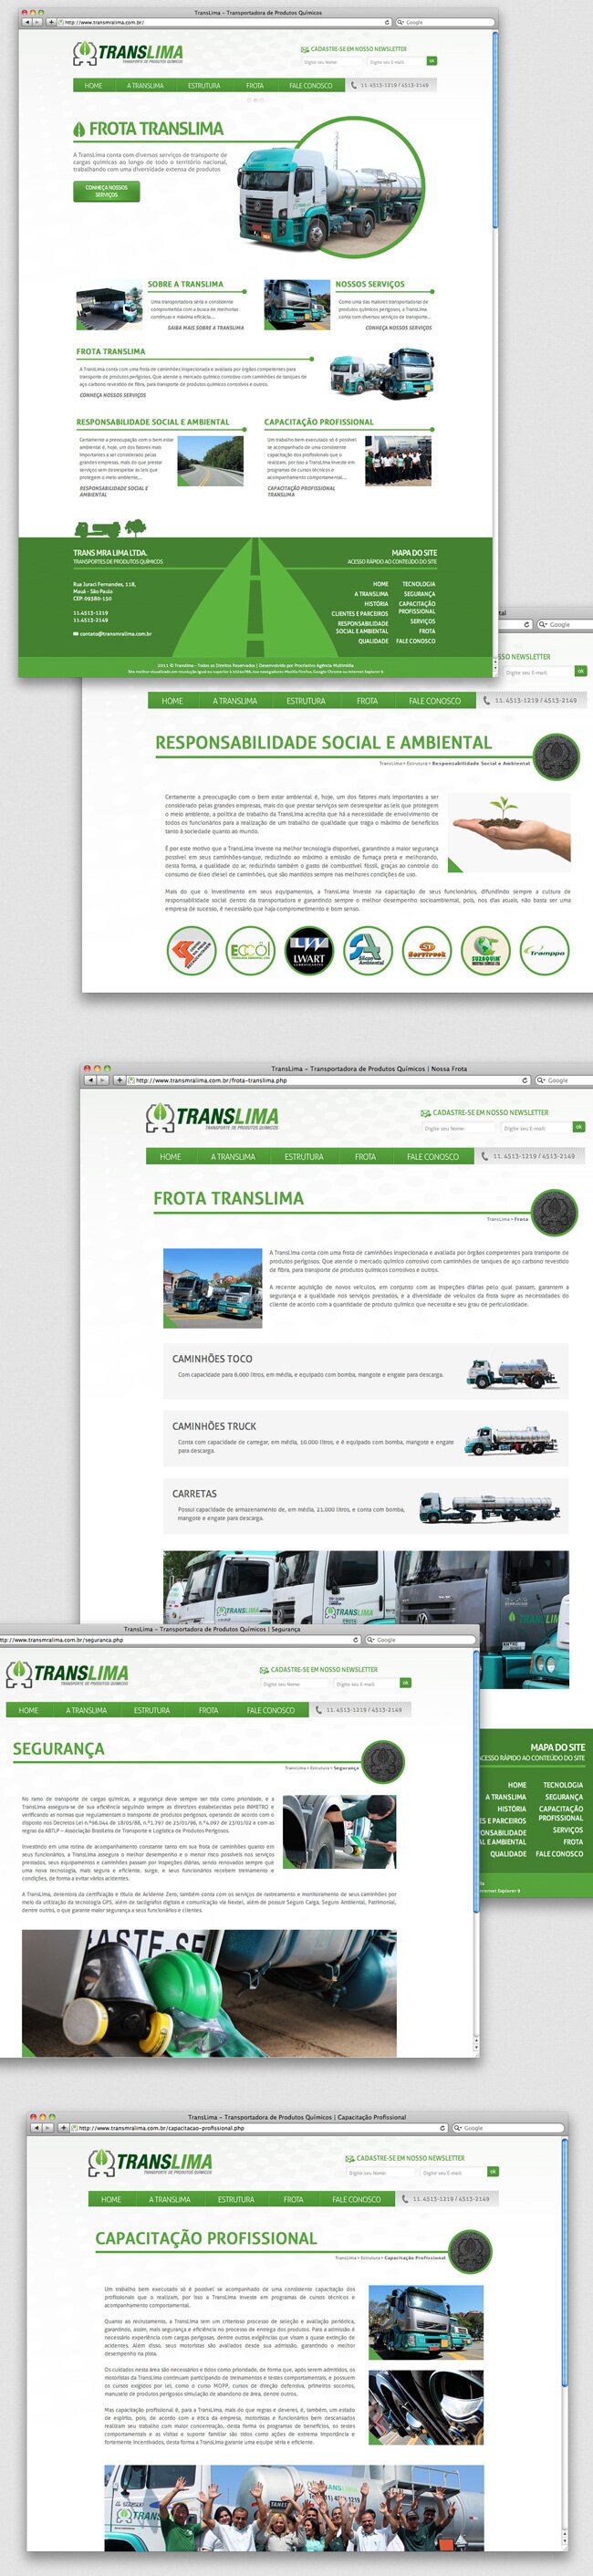 site_translima.jpg